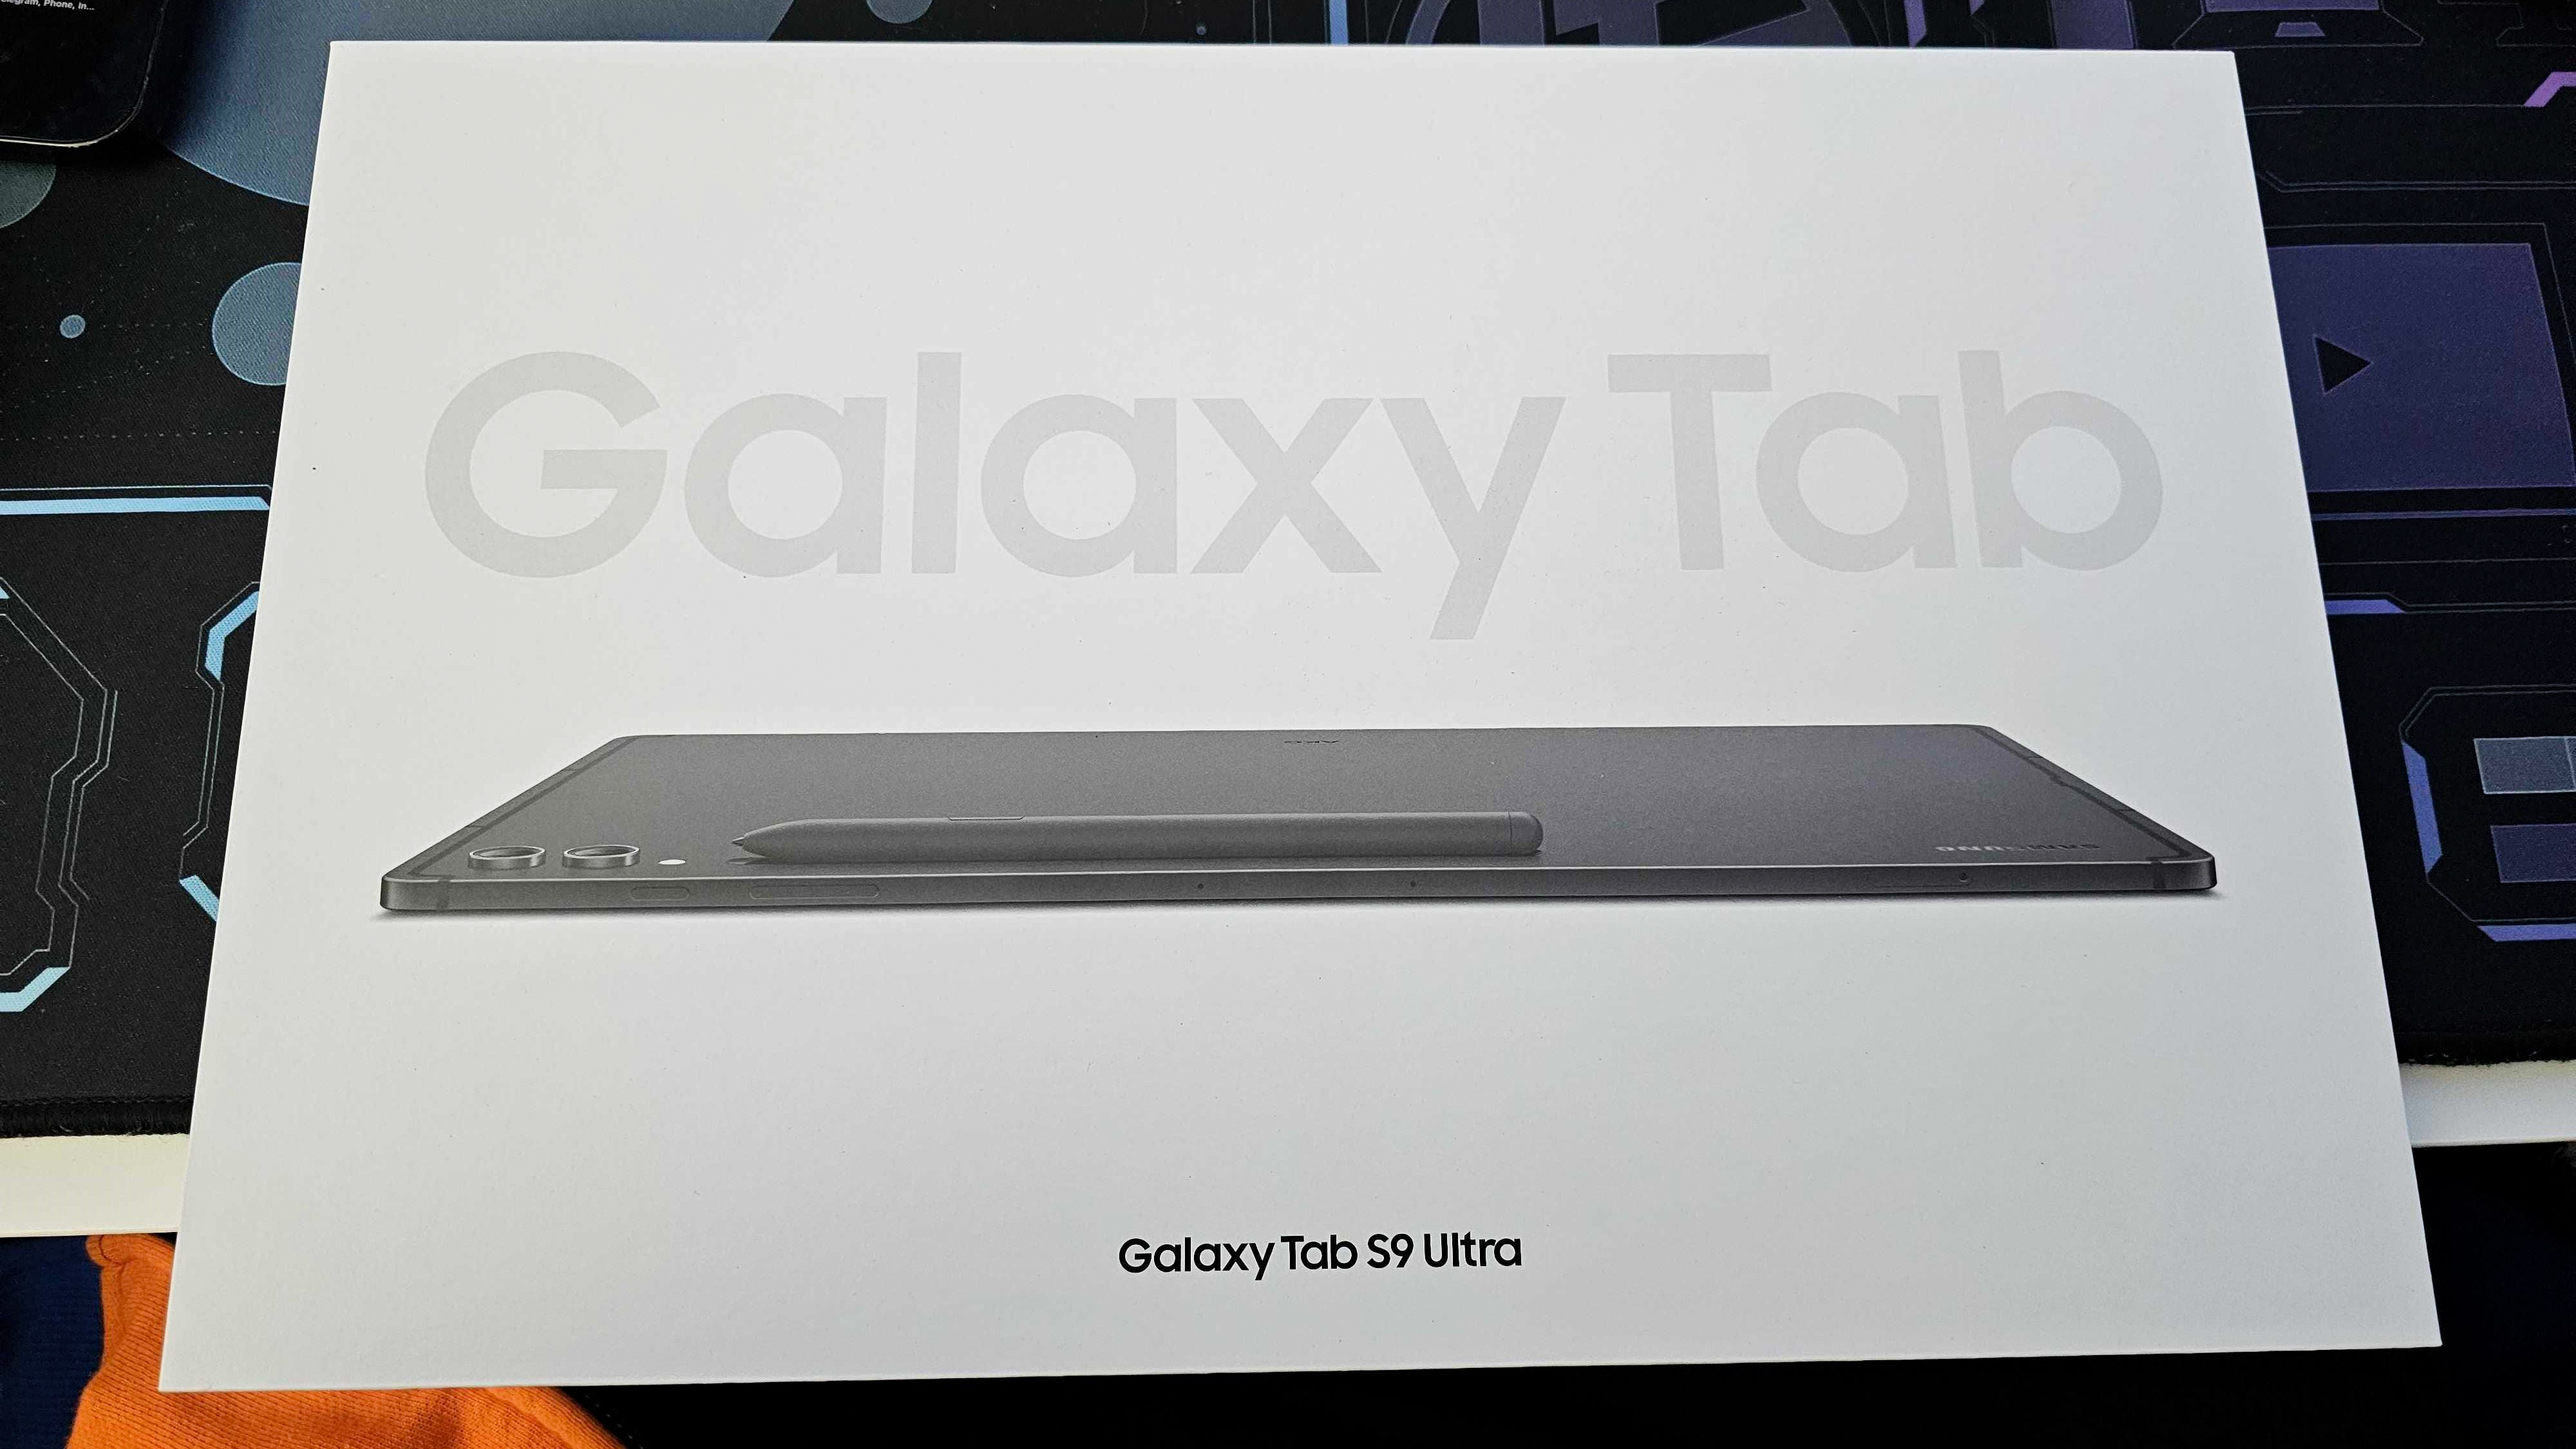 Samsung Galaxy Tab S9 Ultra pacakging on desk